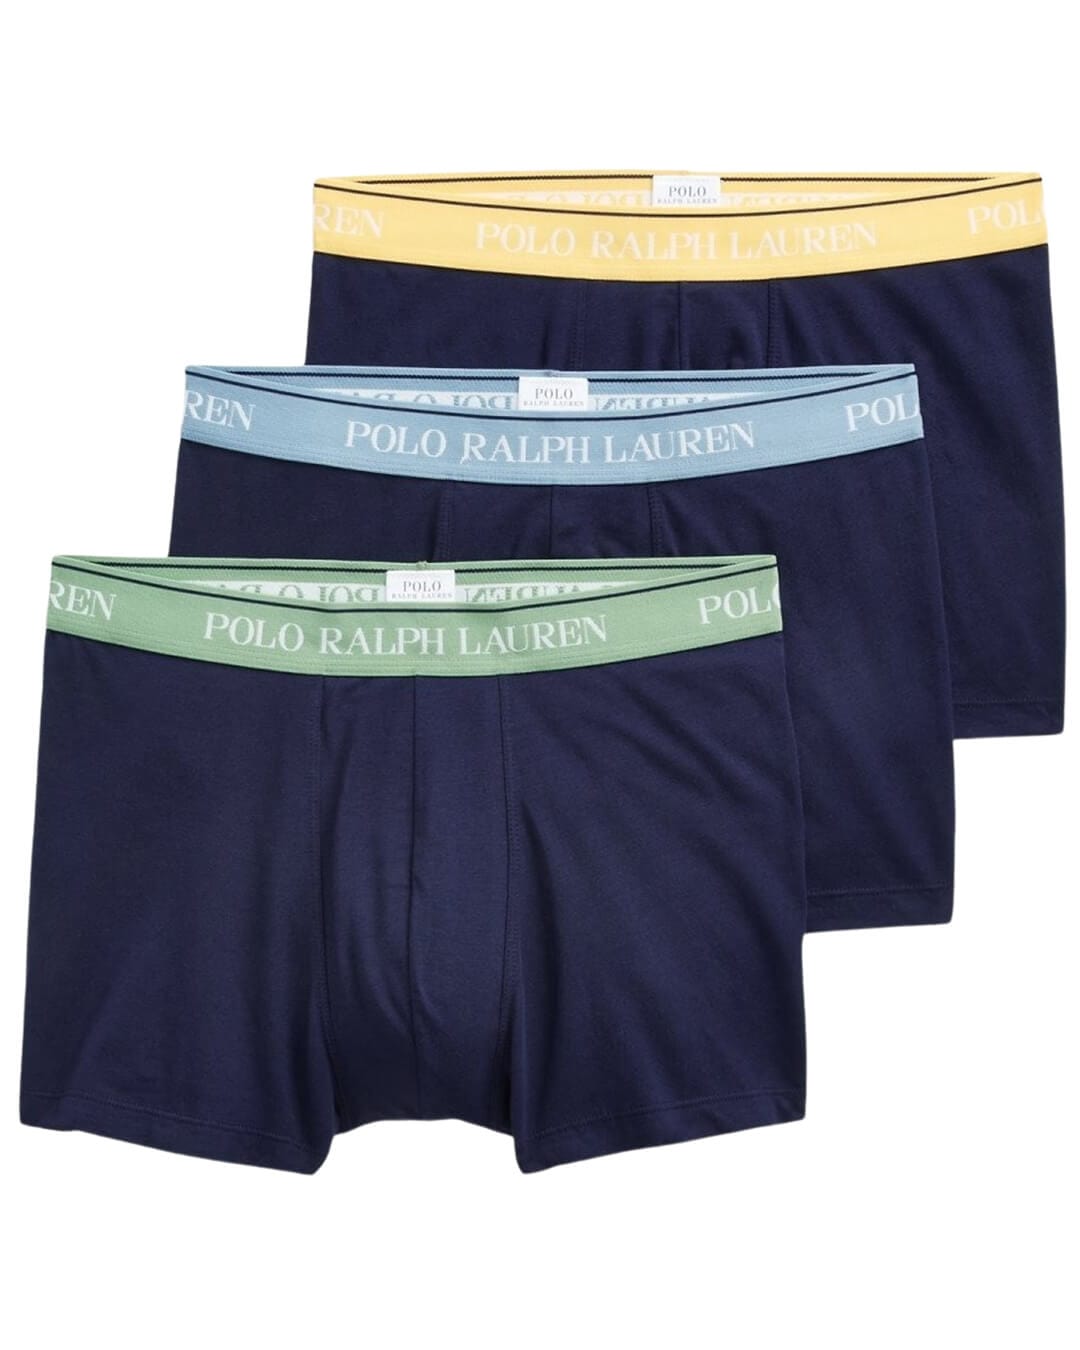 Polo Ralph Lauren Underwear Polo Ralph Lauren Navy With Pastel Elastic Three-Pack Trunks